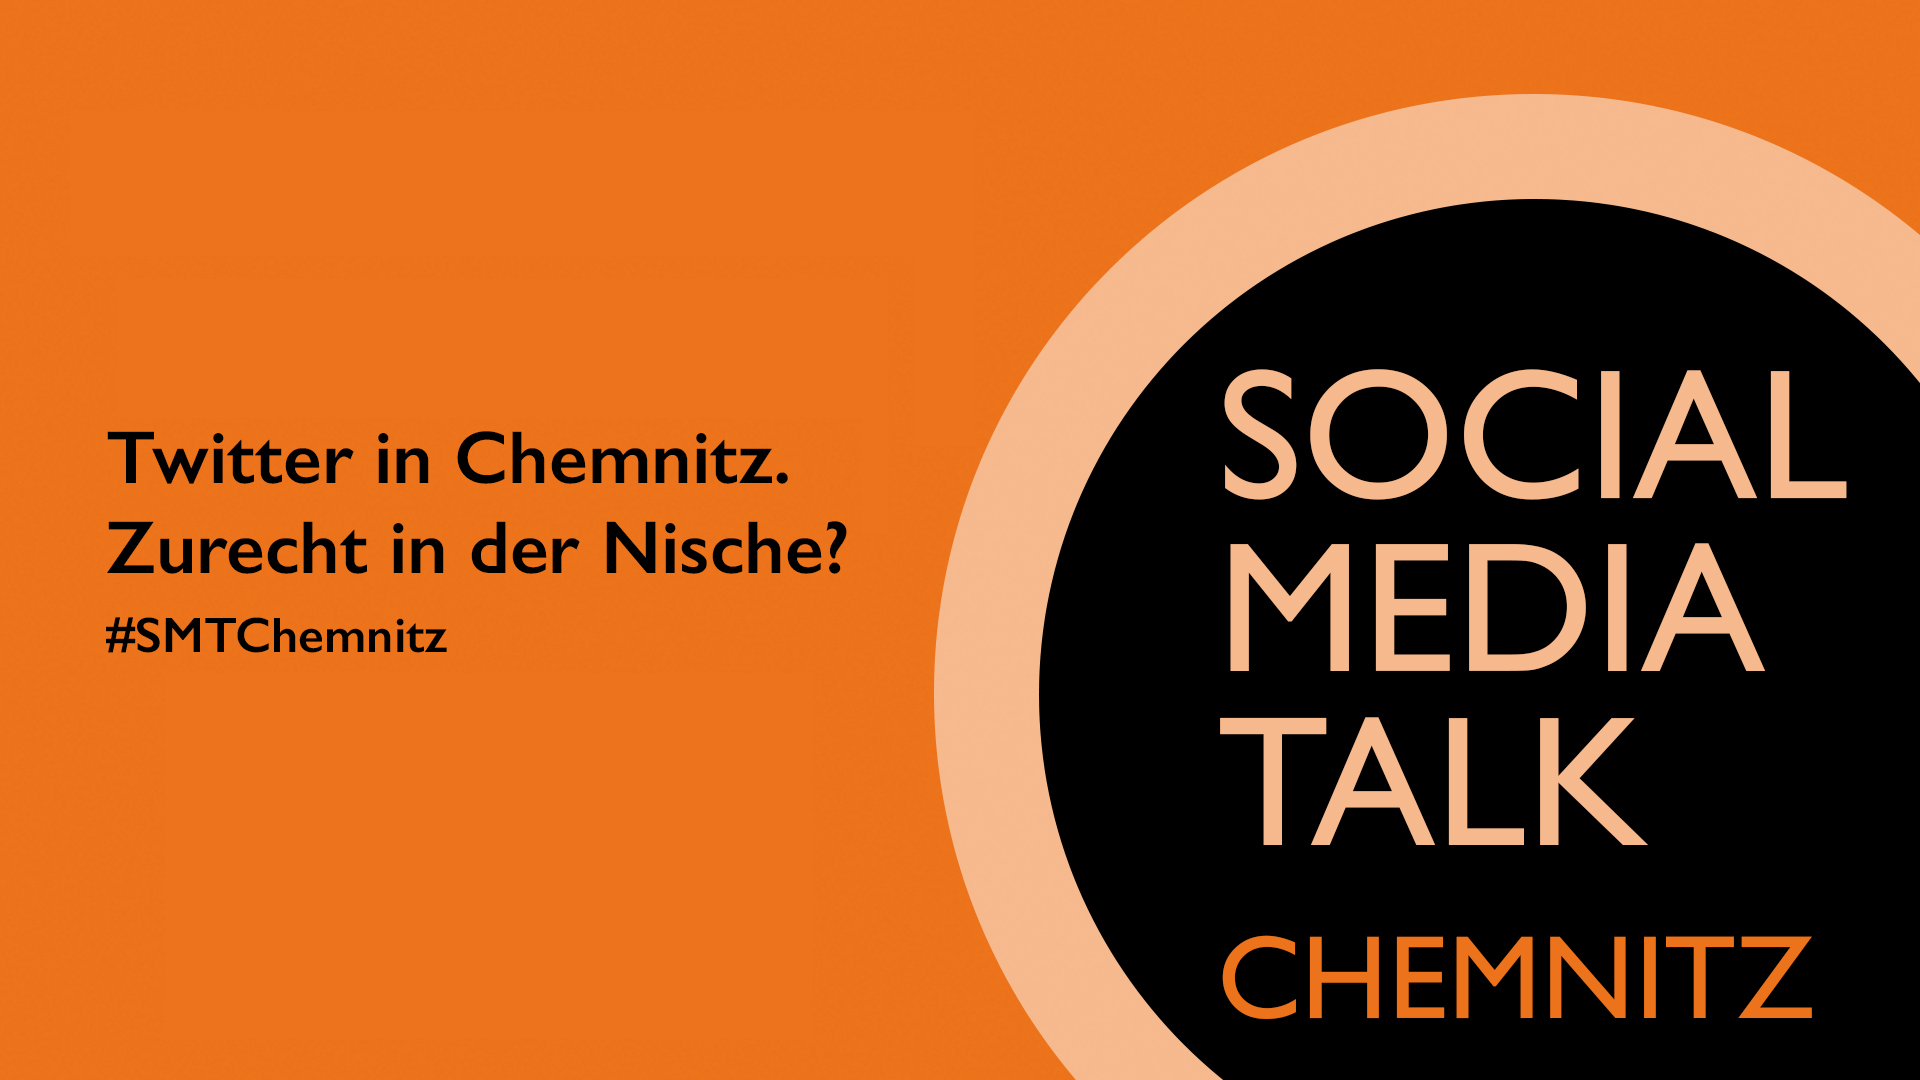 Social Media Talk #4 - Twitter in Chemnitz 04.11.2015